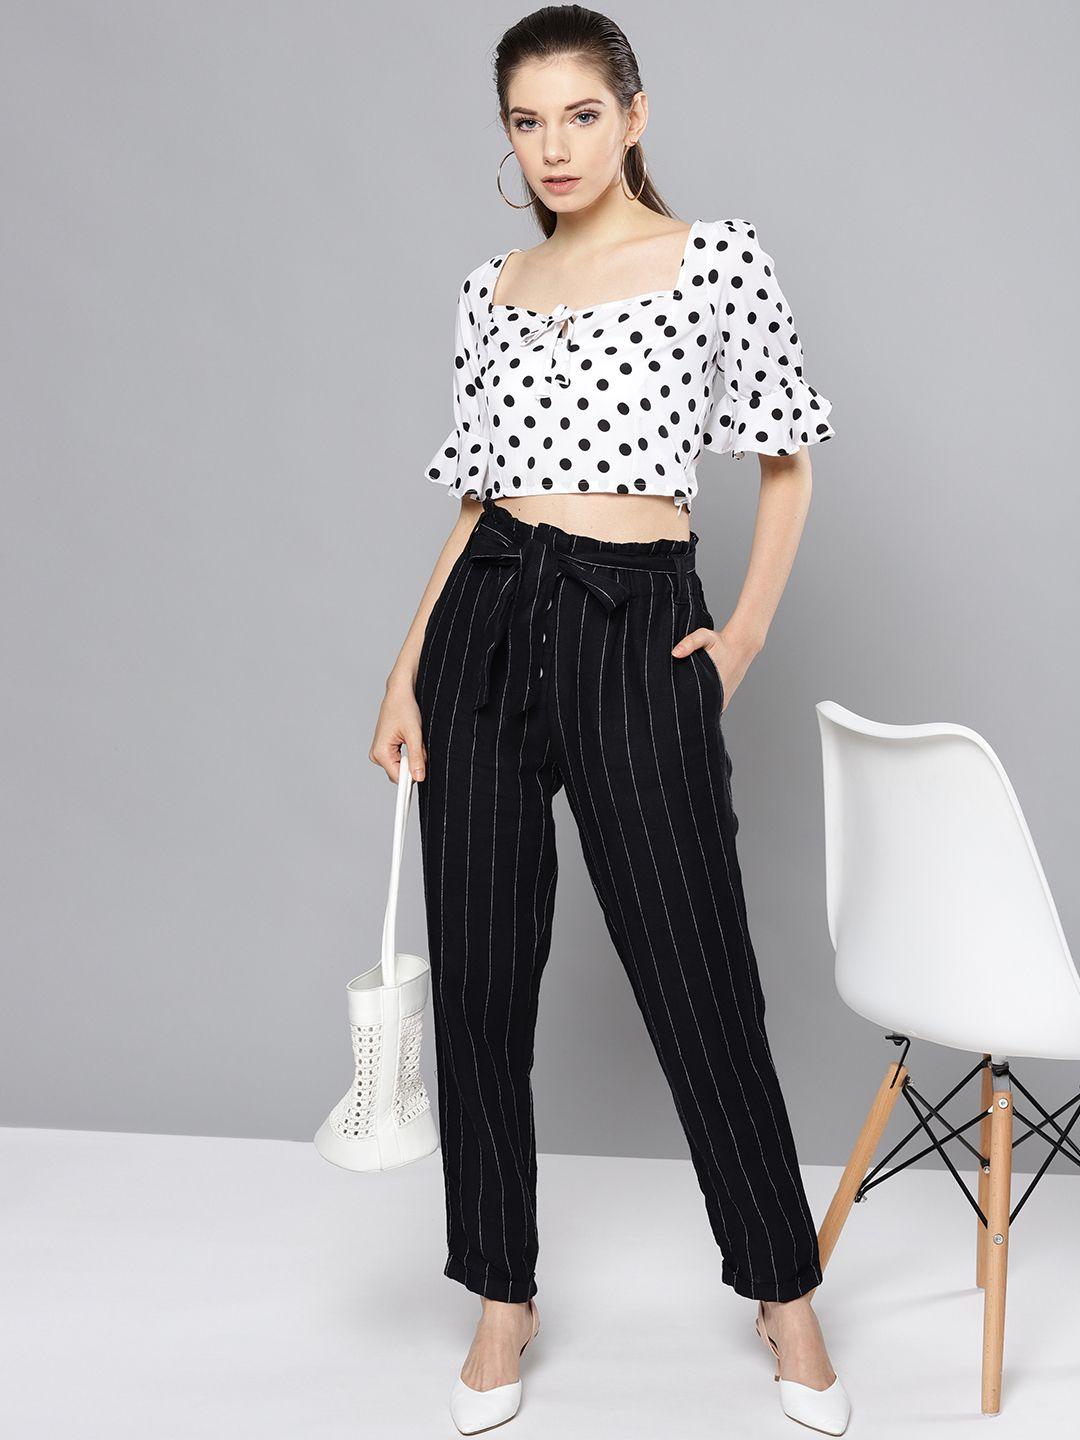 besiva women white & black polka dots print crop top